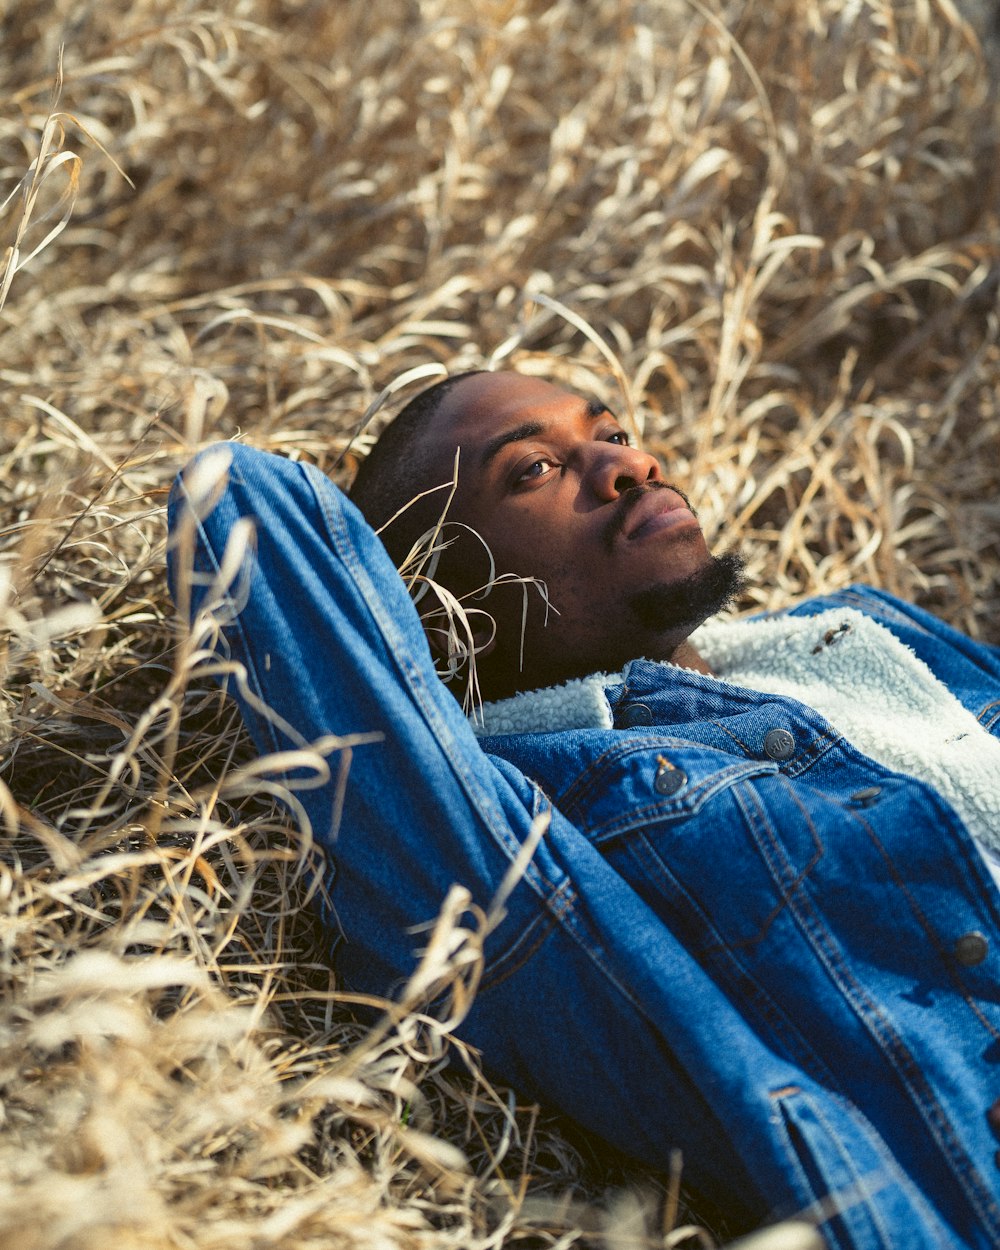 man in blue denim jacket lying on brown grass field during daytime